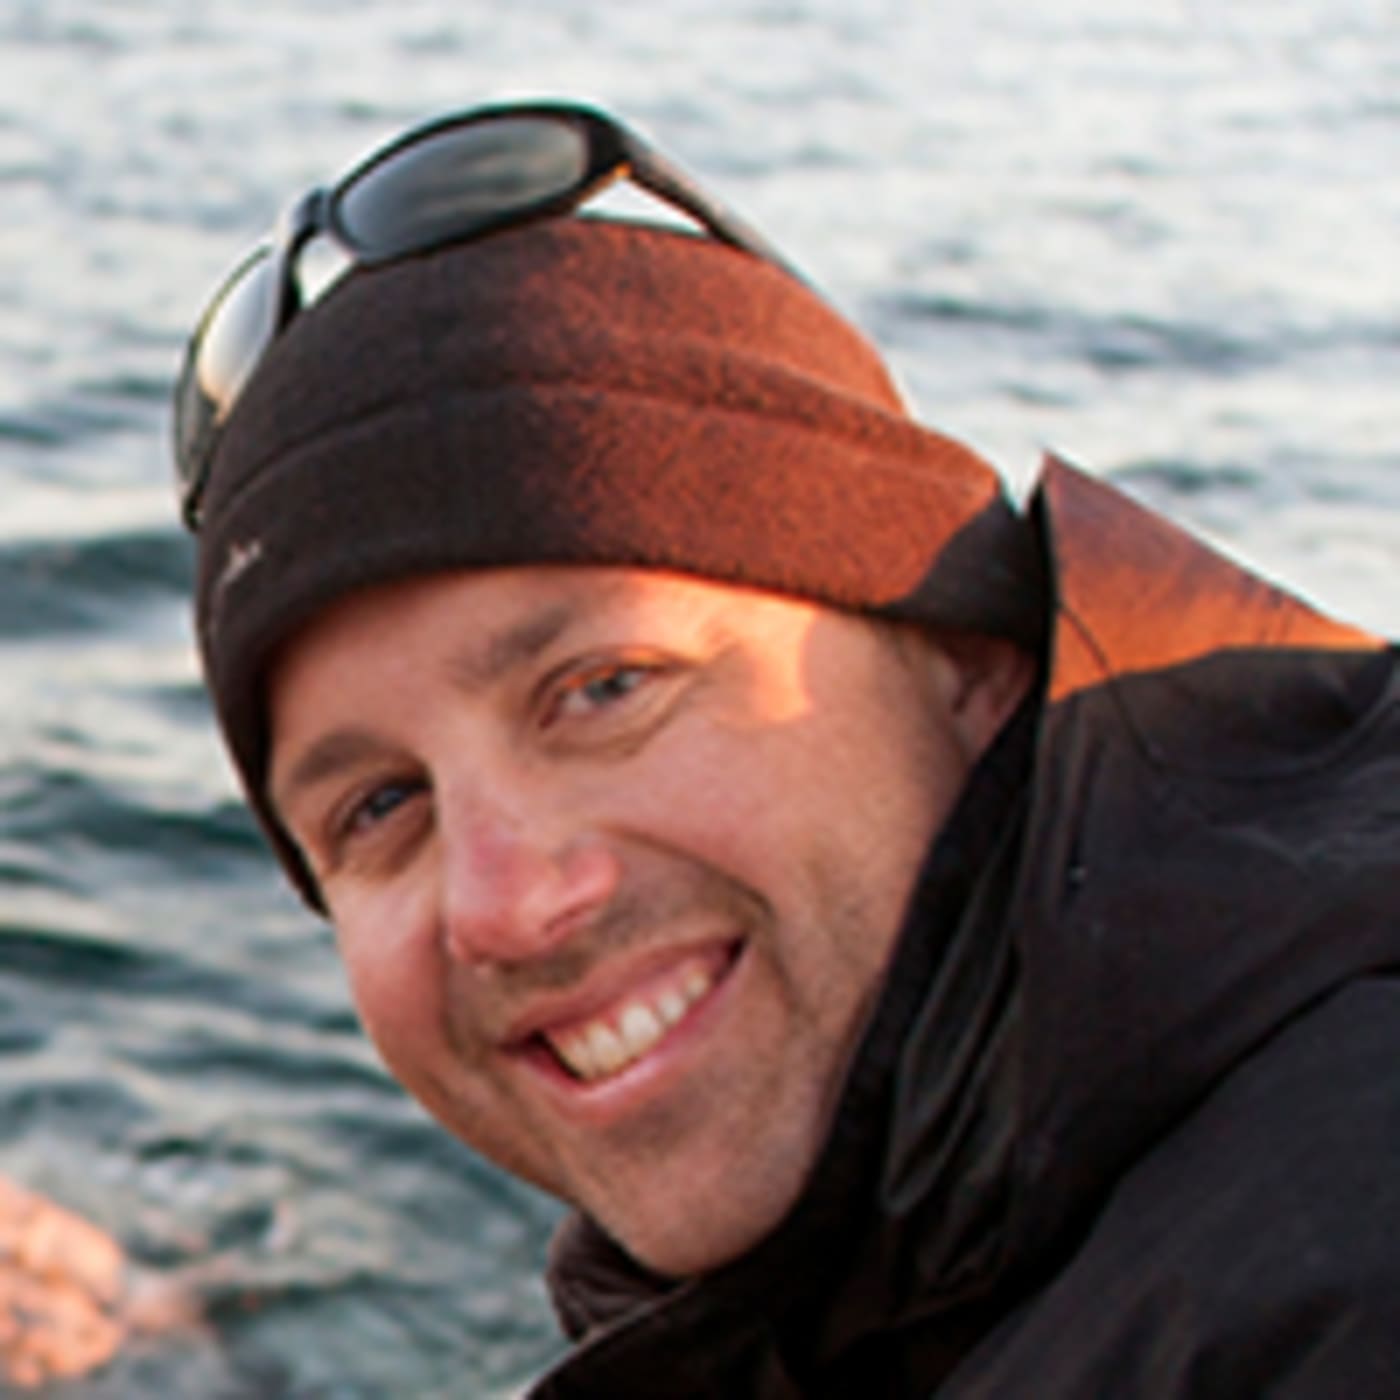 Christopher Johnson, WWF-Australia's Oceans Science Manager